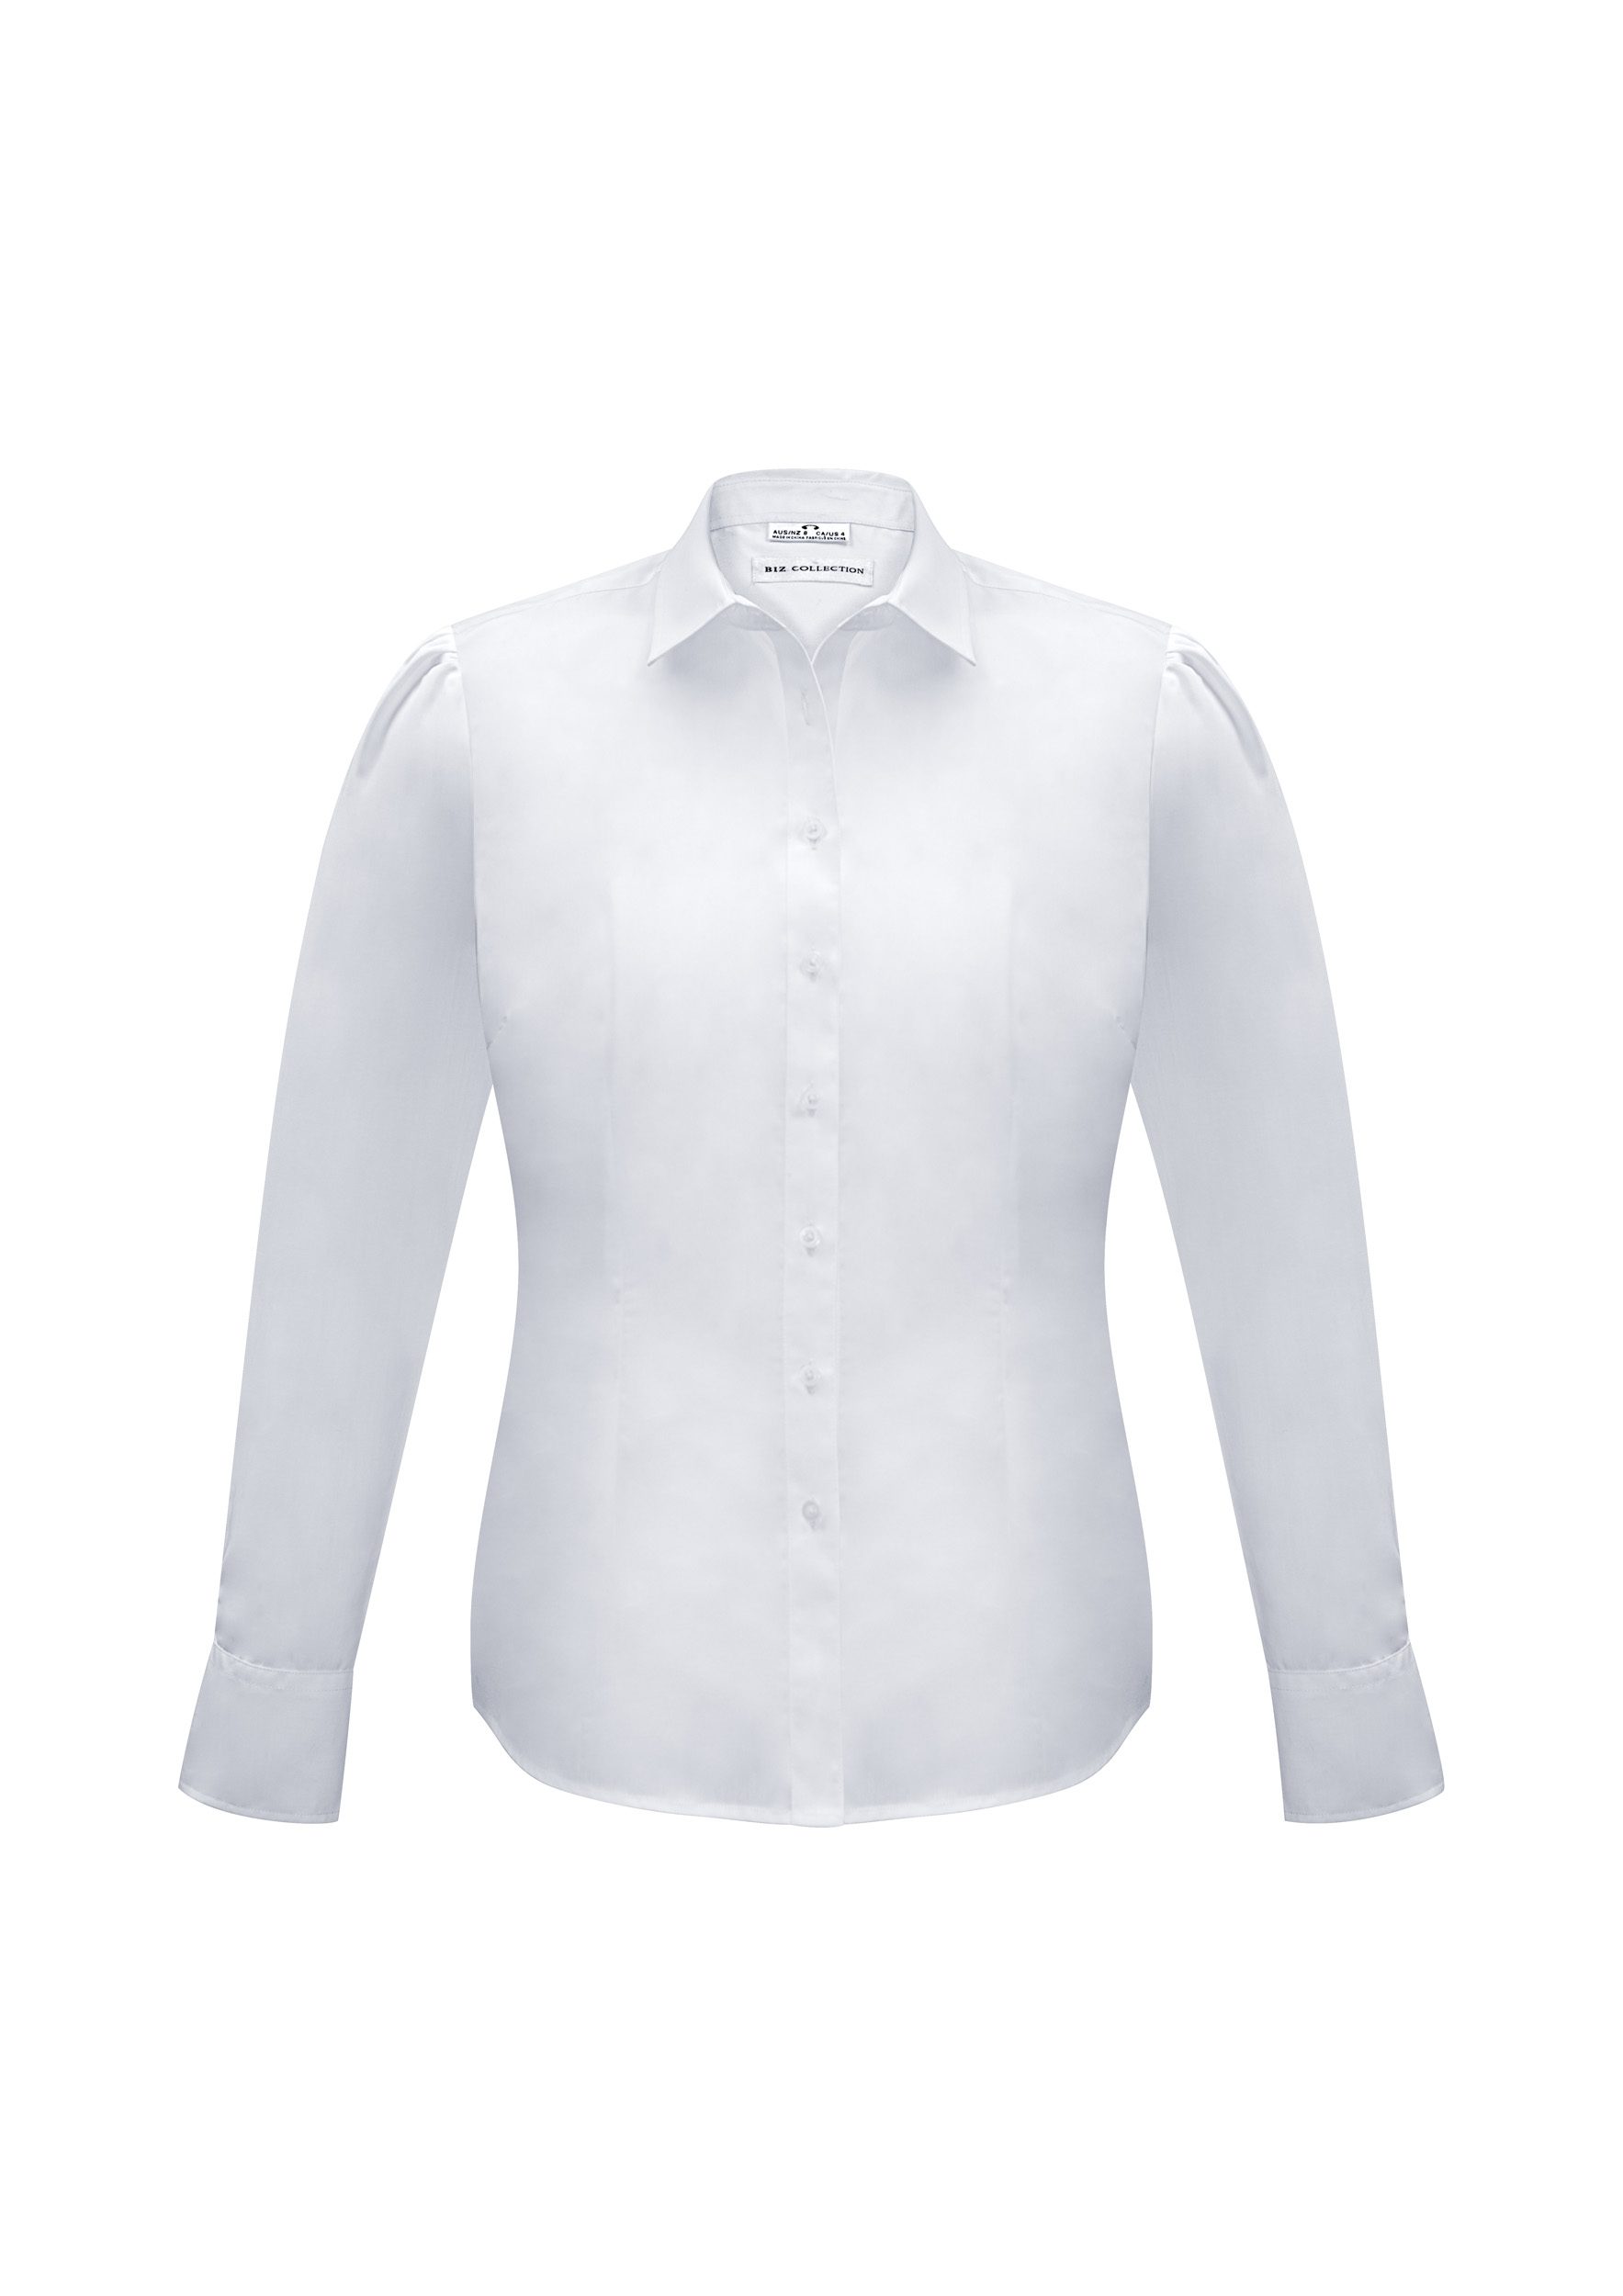 Biz Collection Ladies Euro Long Sleeve Shirt #S812LL White